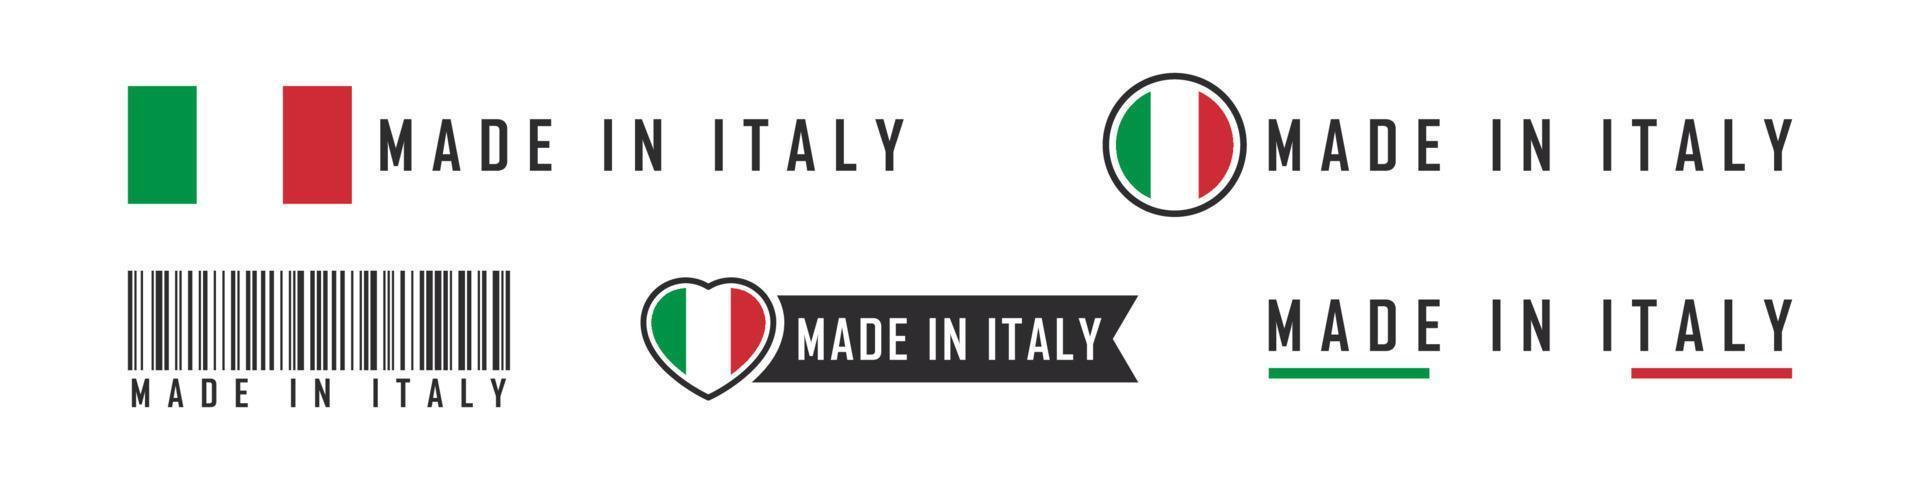 made in italy logo o etiquetas. emblemas de productos de italia. ilustración vectorial vector